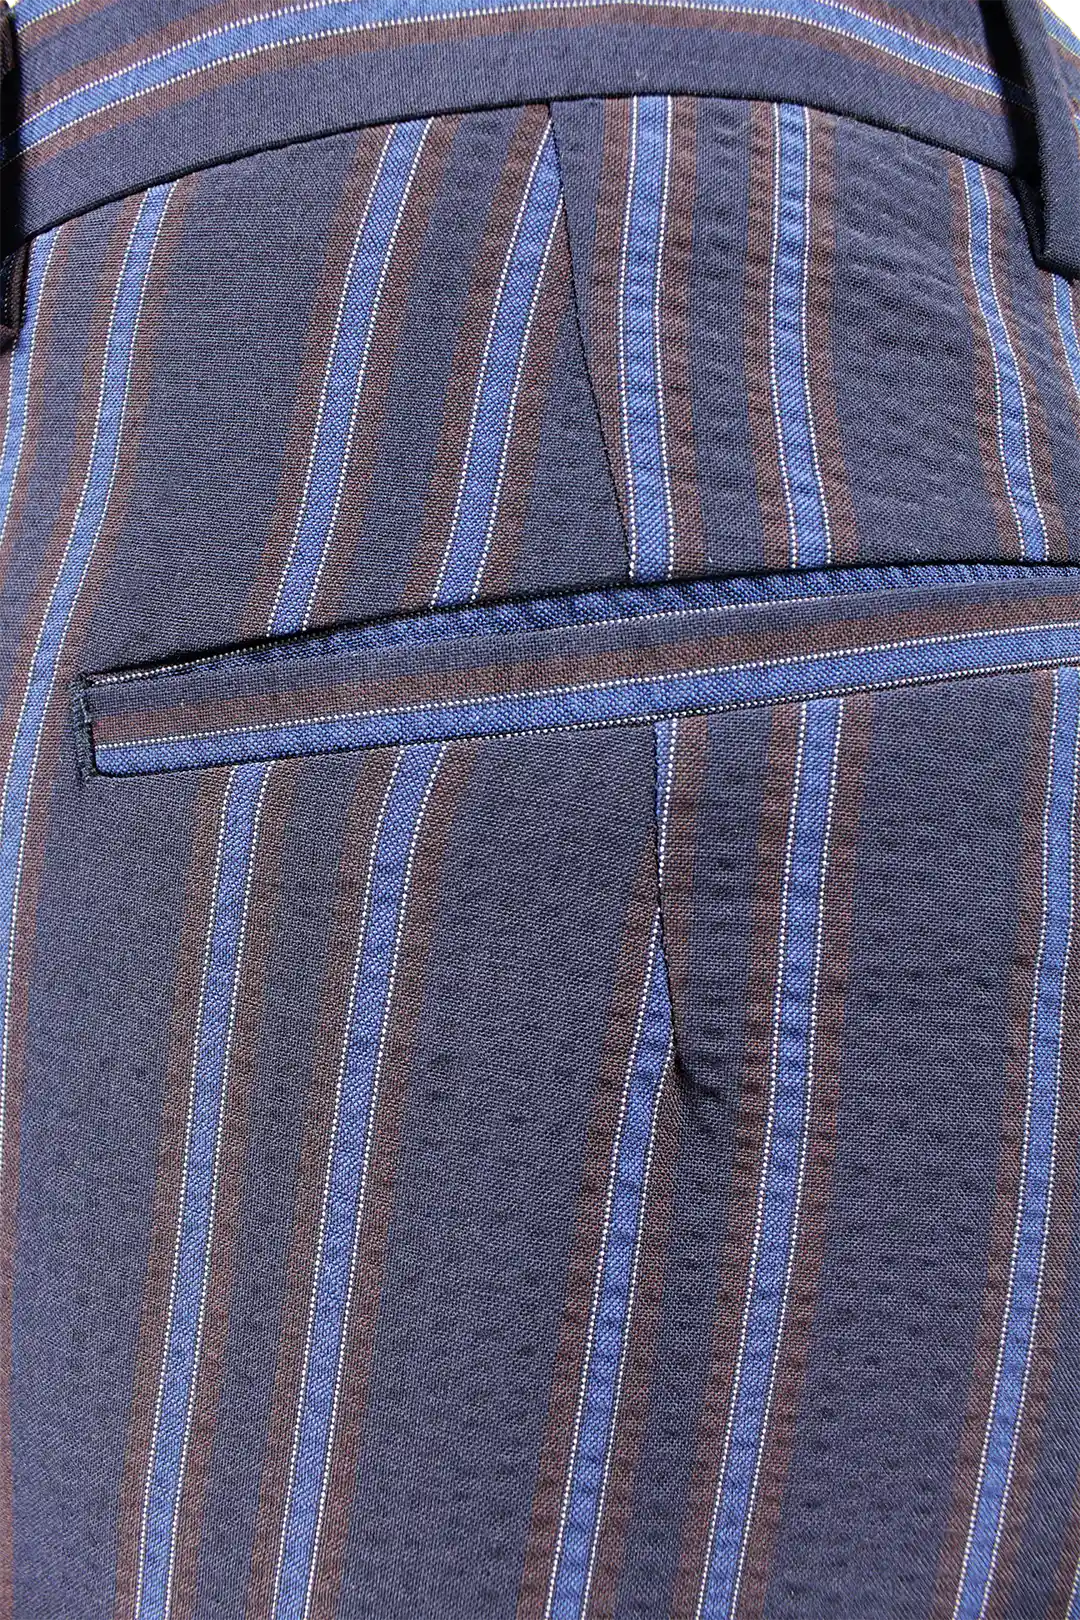 Pantalone Japan lana seersucker righe blu filetti